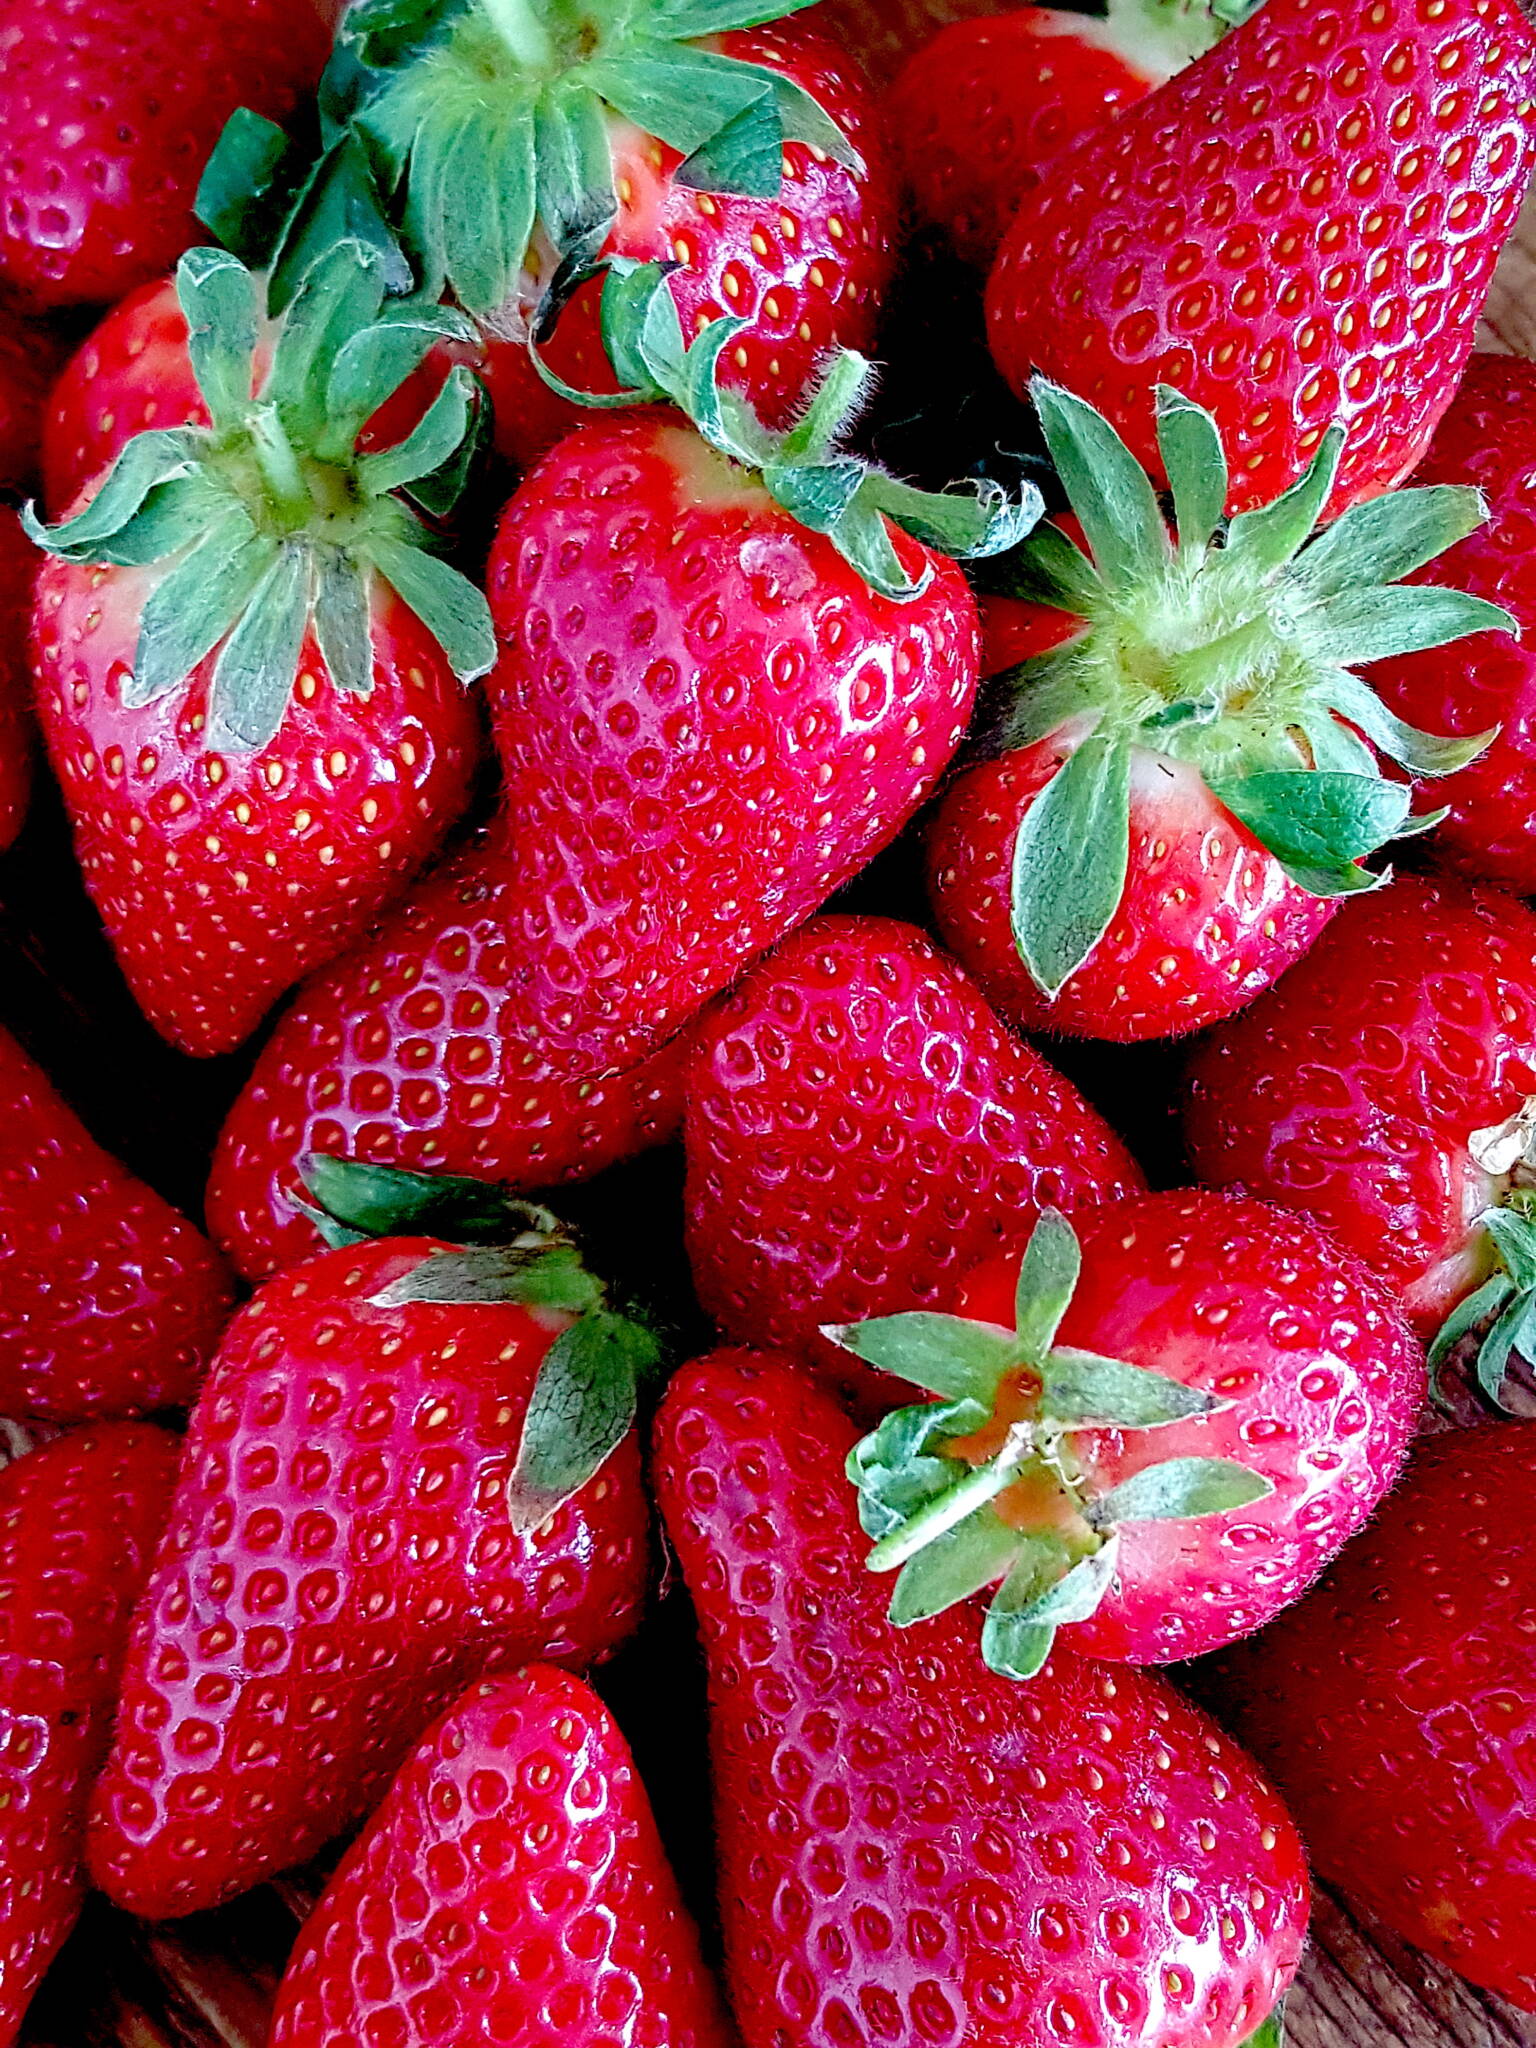 Julie Biuso @ Shared Kitchen|Strawberries in a pot|Strawberries